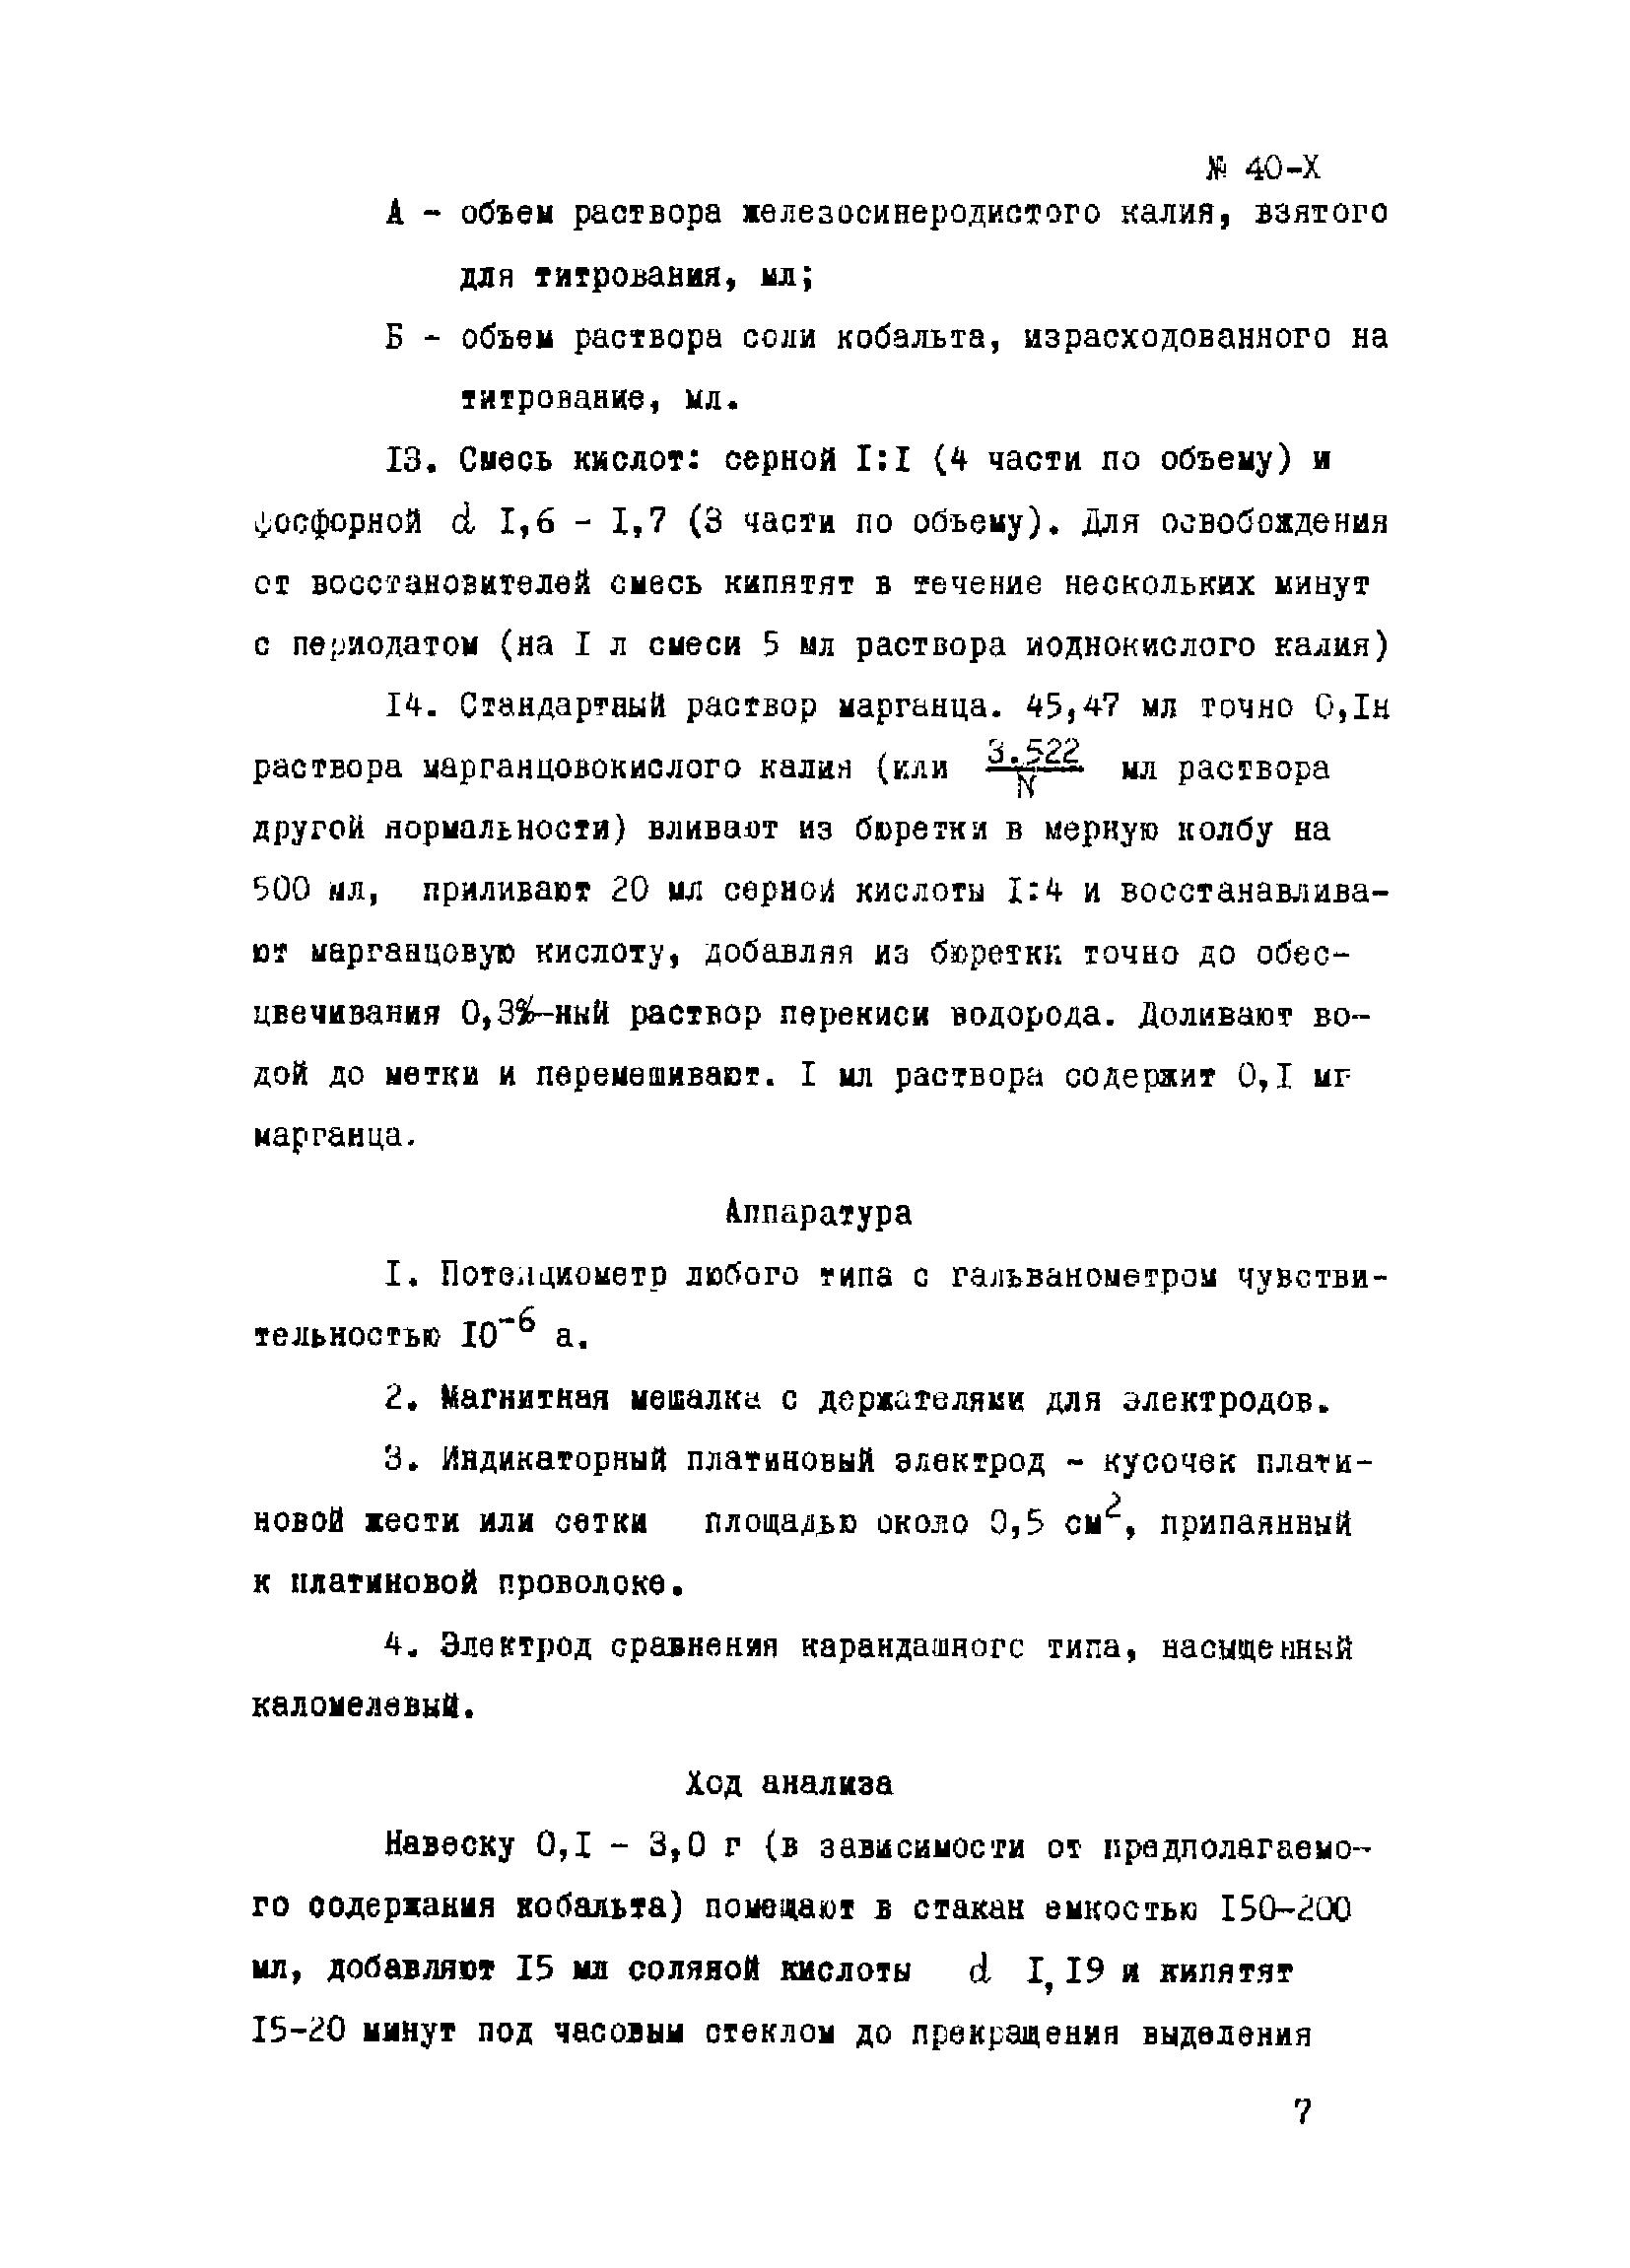 Инструкция НСАМ 40-Х